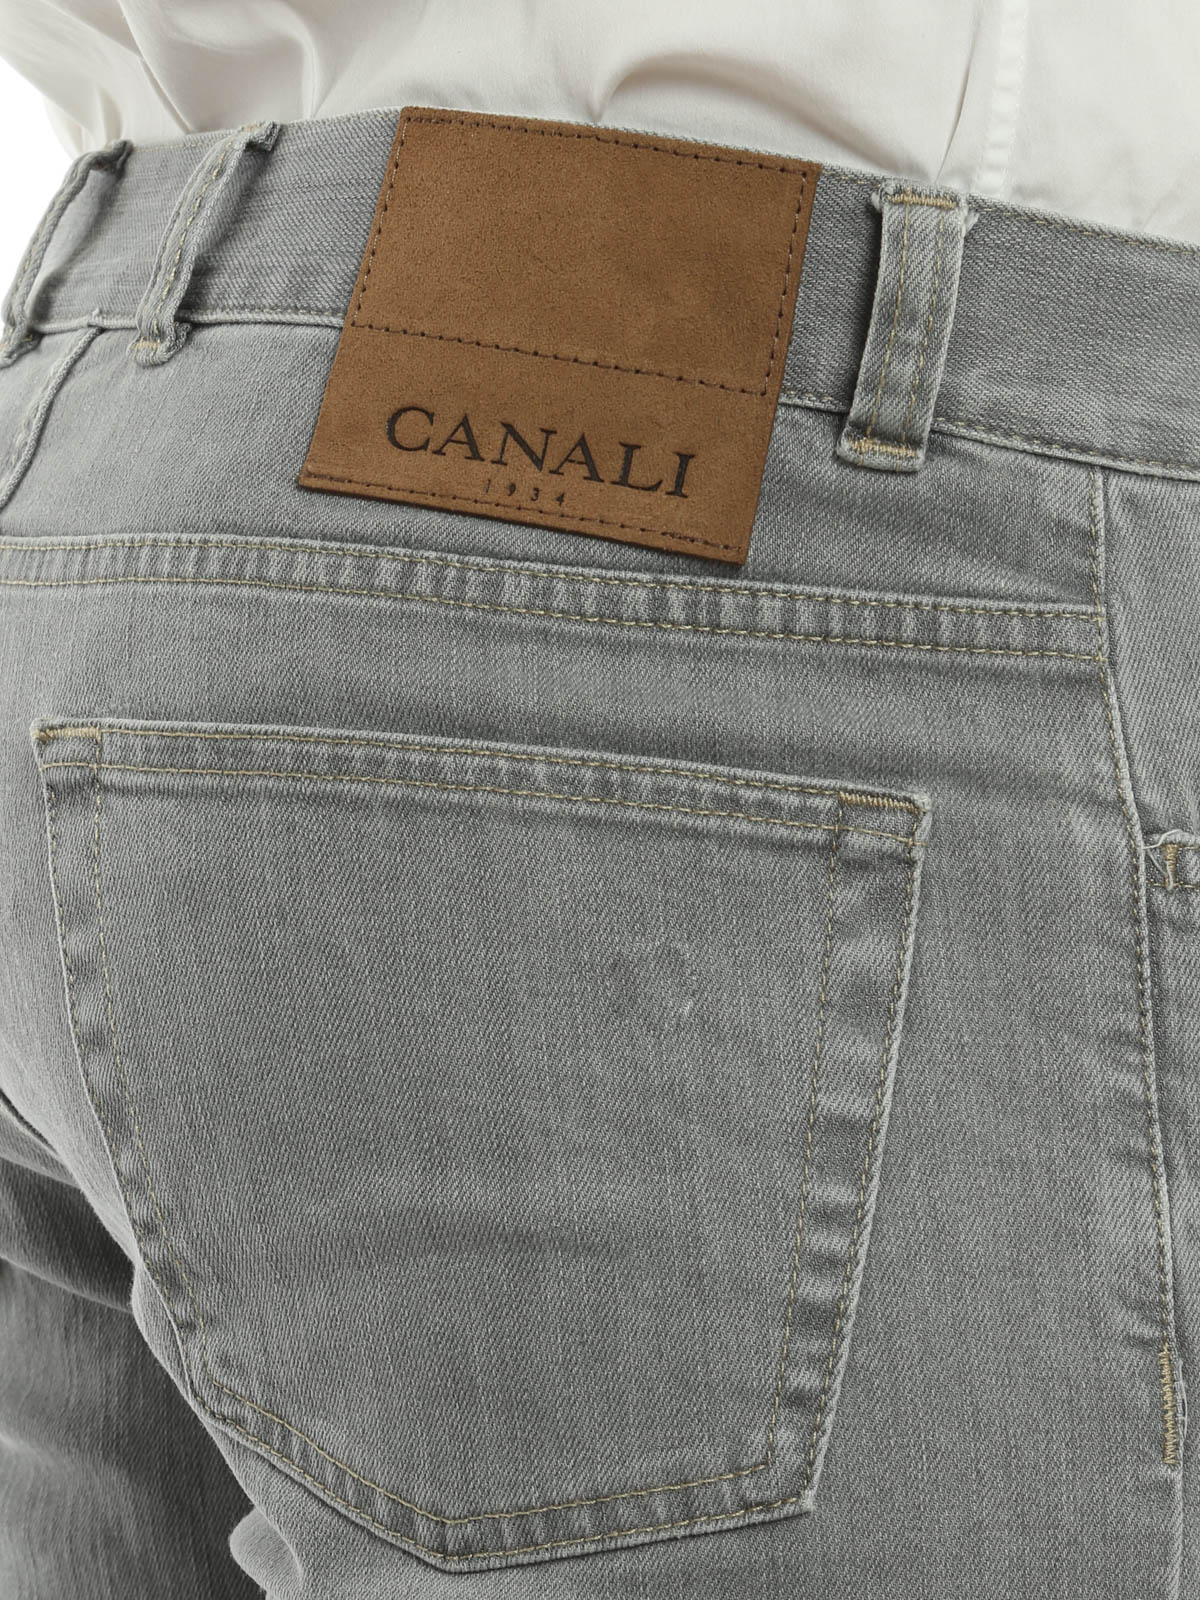 canali jeans sale